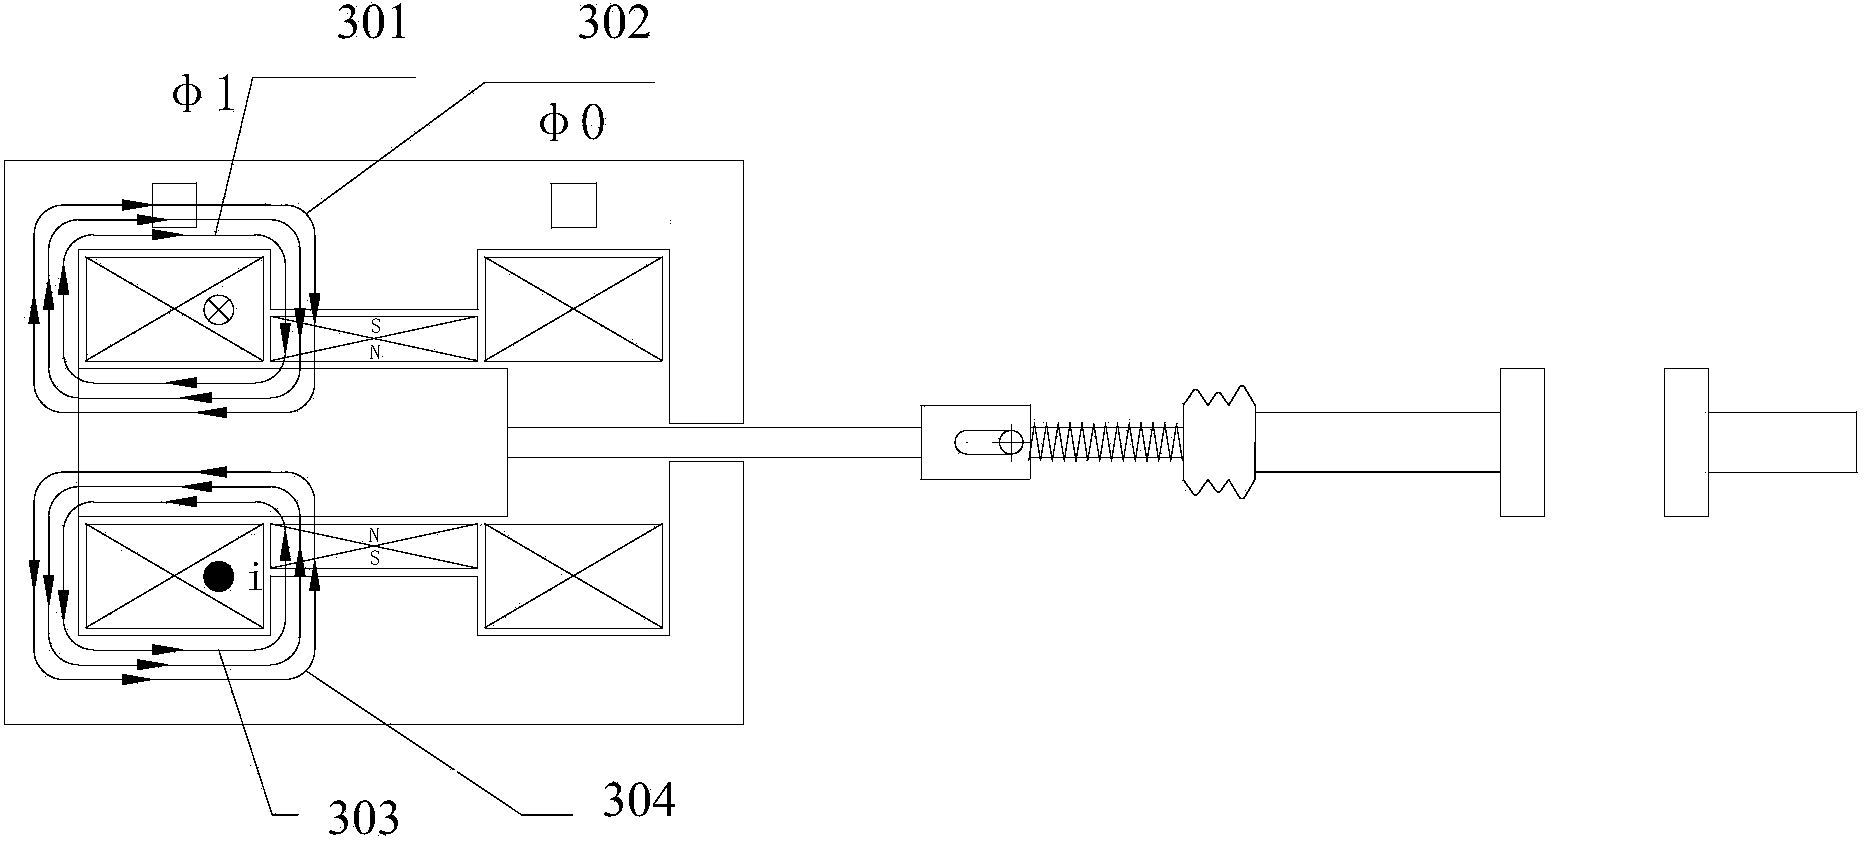 Integrated permanent magnet mechanism vacuum switch